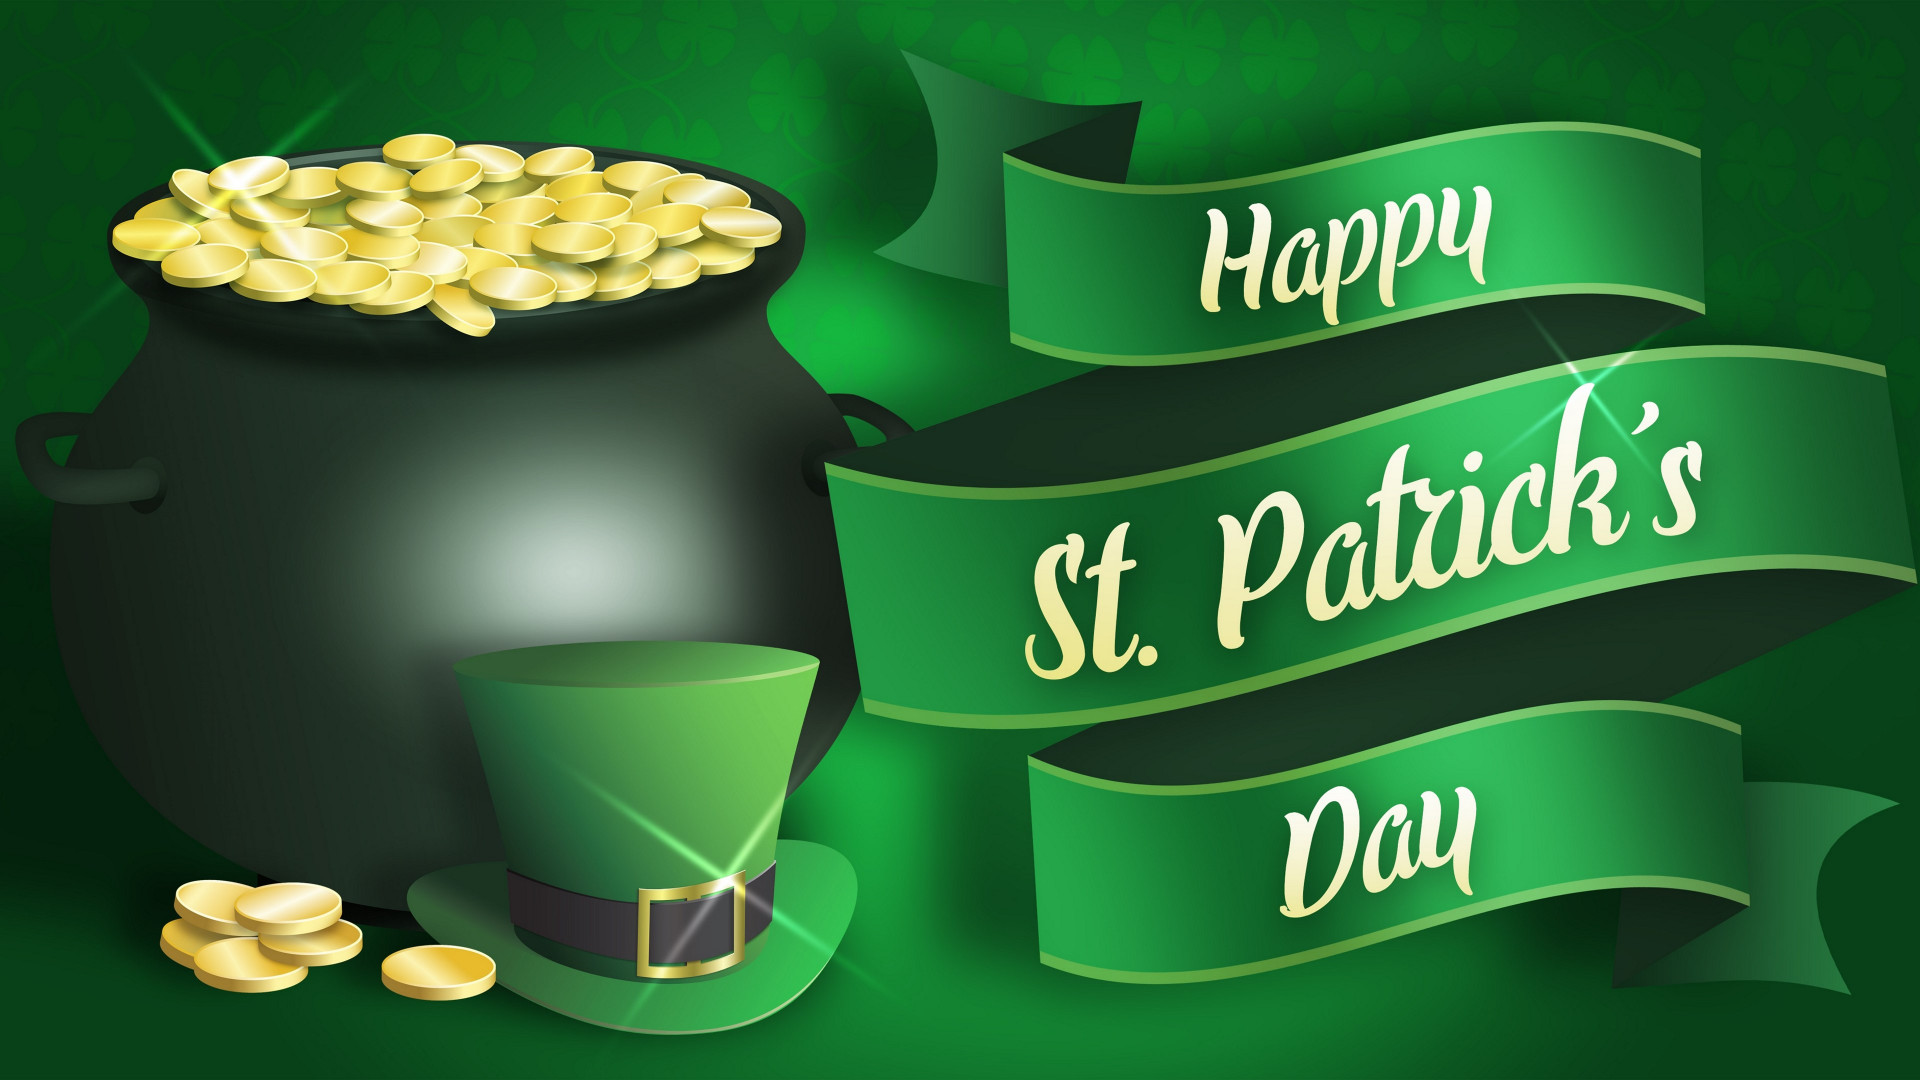 Happy Saint Patrick's Day wallpaper 1920x1080